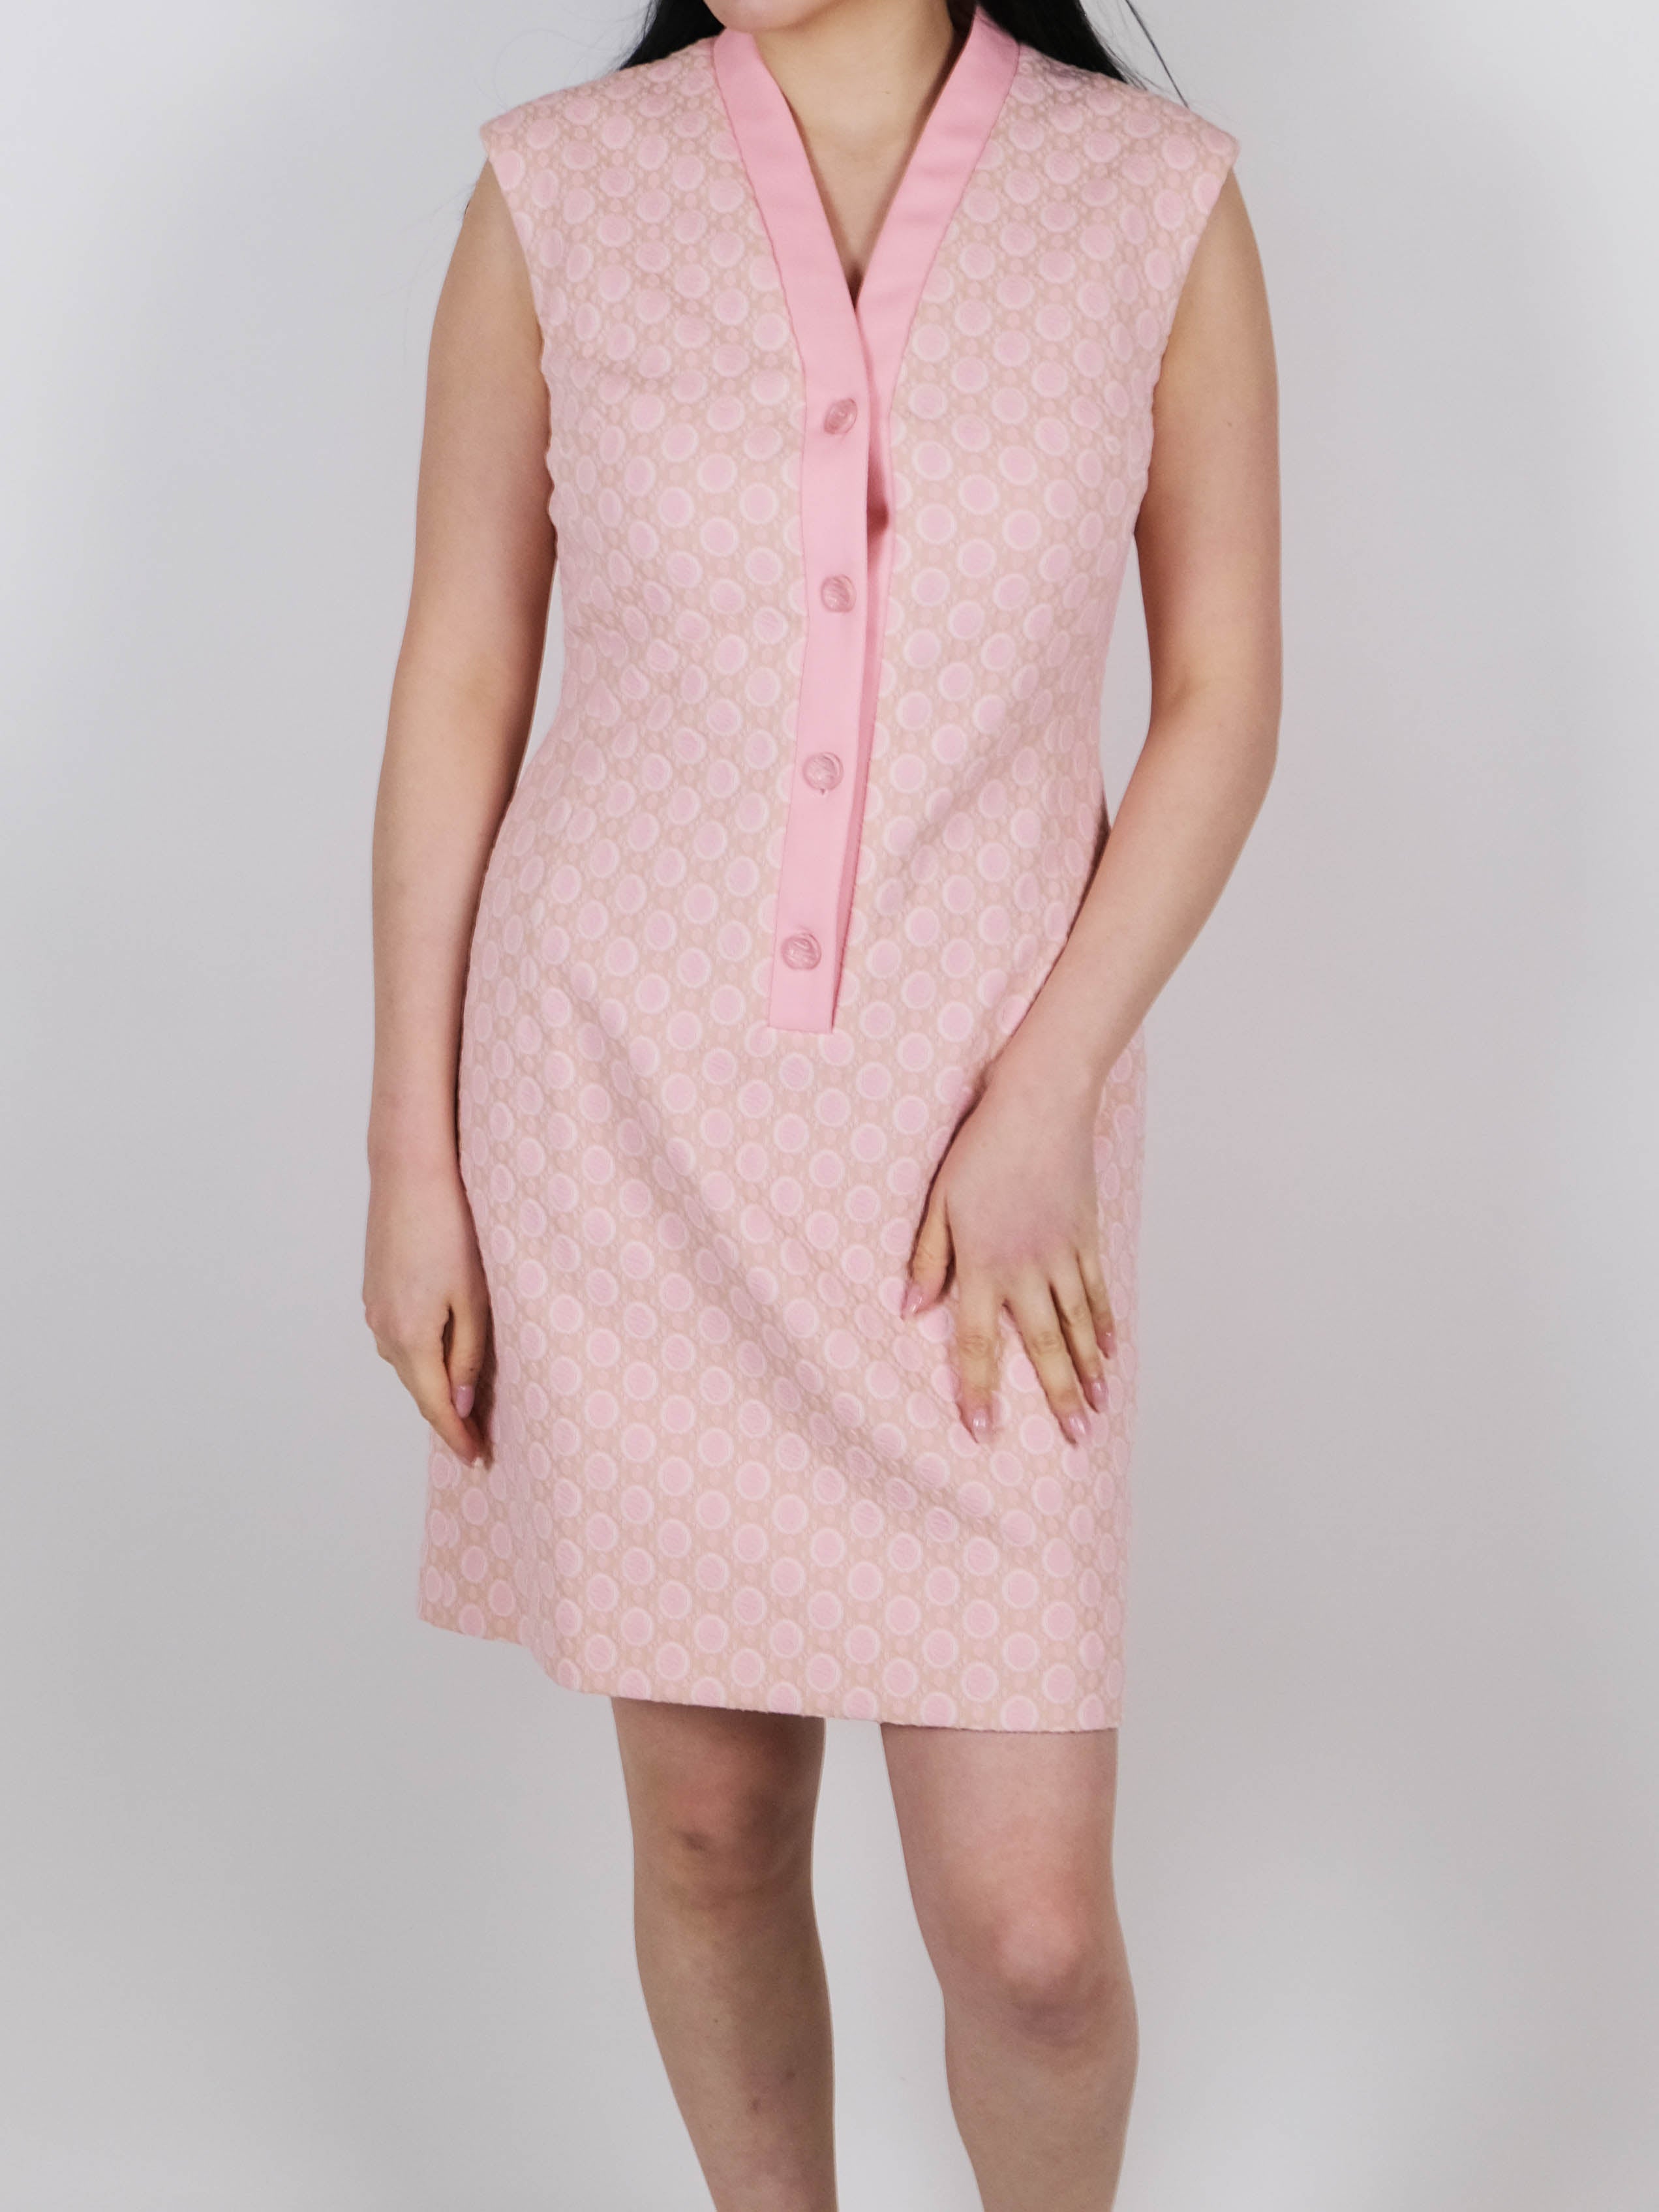 60s dress pink